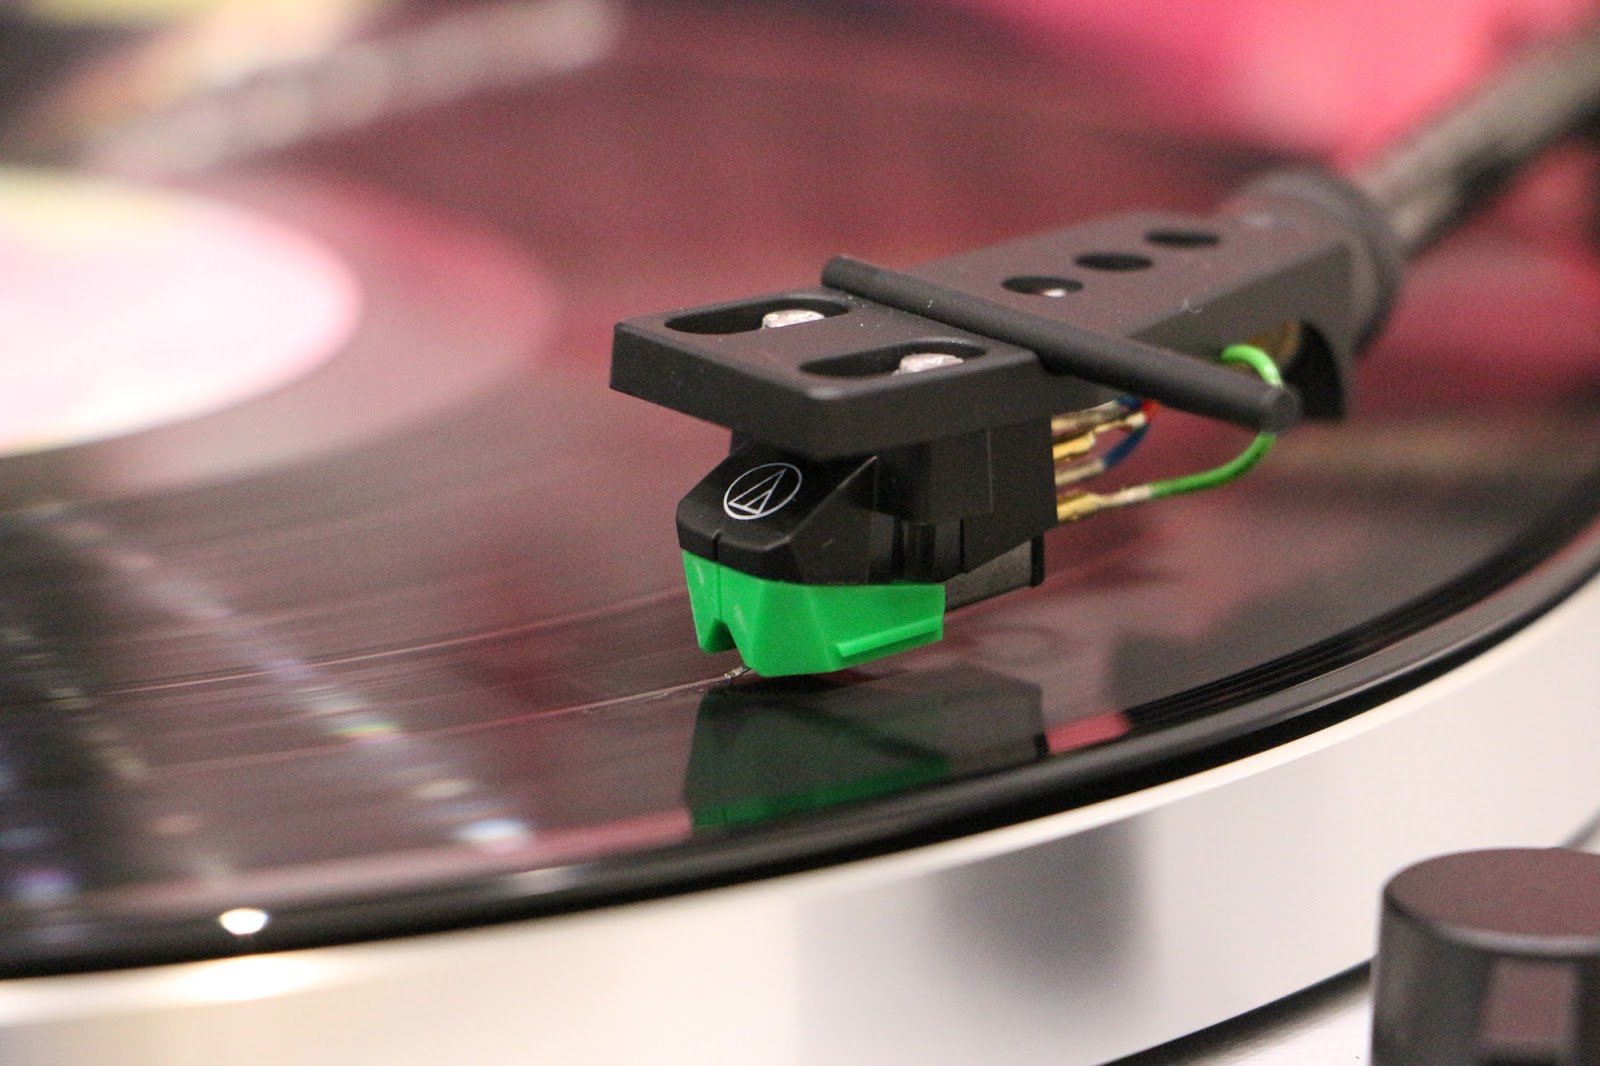 teng hong hui Turntable Phono Ceramic Cartridge Stylus Replacement for Vinyl Stylus Cartridge Turntable Record Player Phonograph